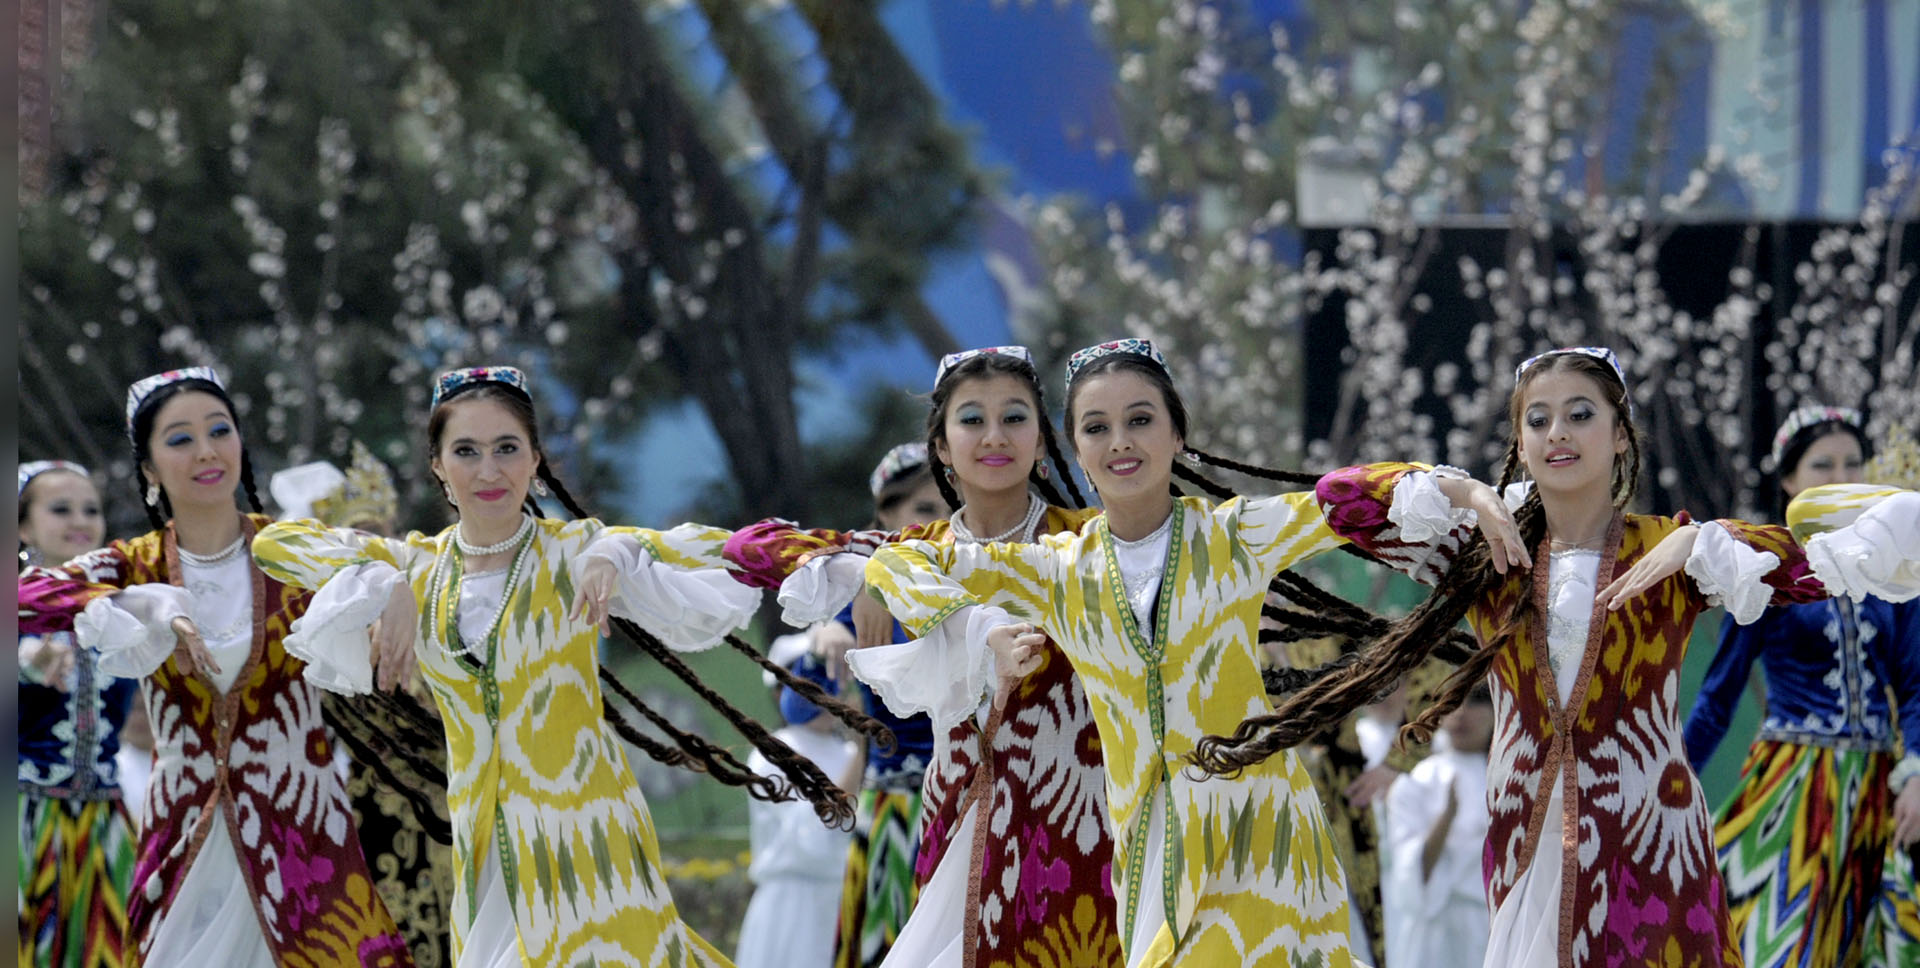 Do you know the sights of Uzbekistan?